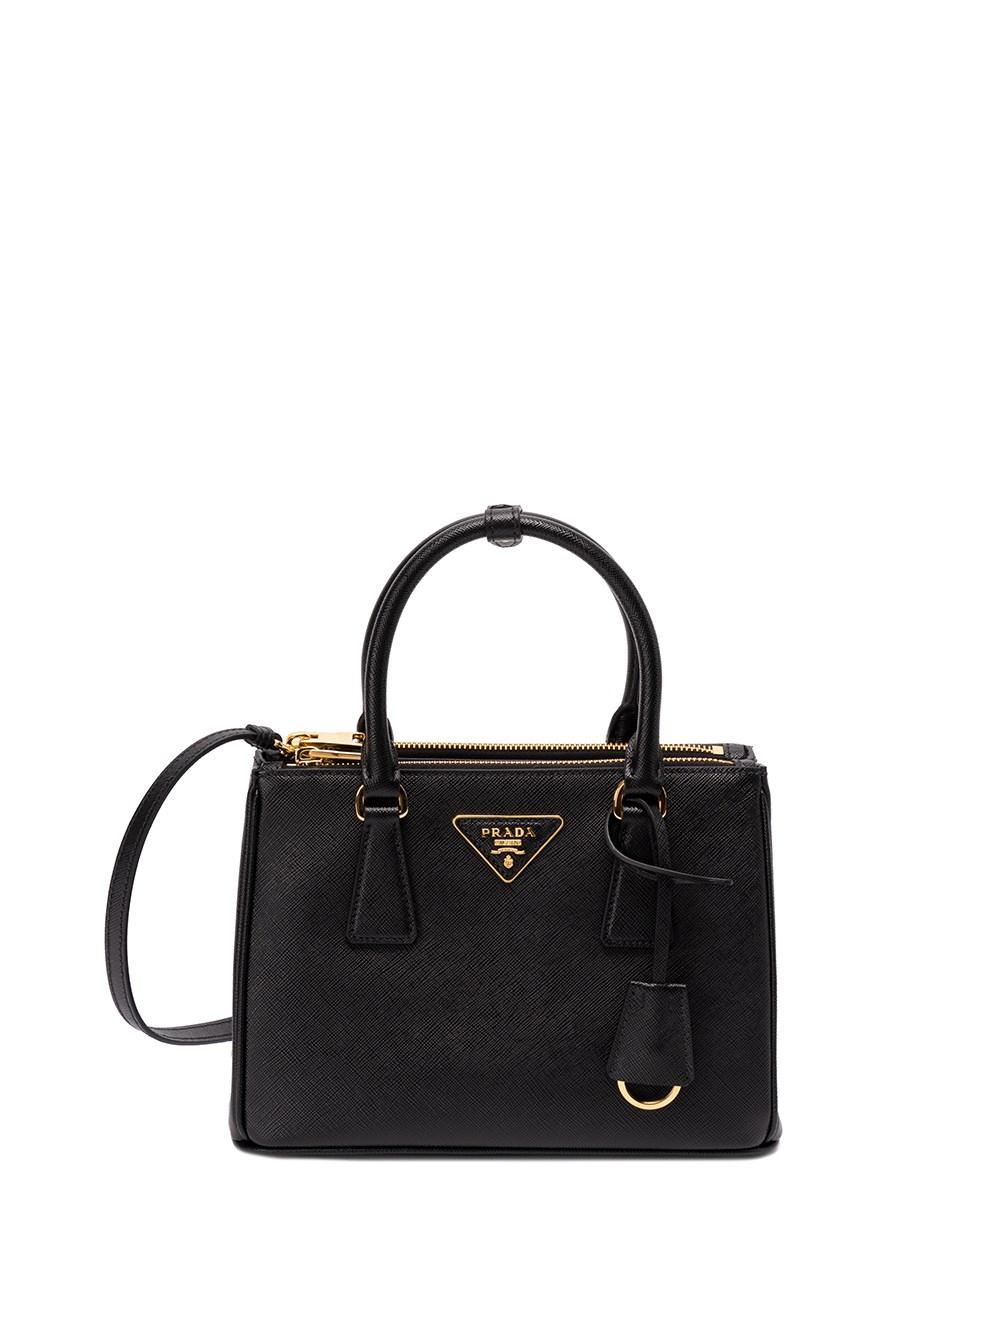 Prada Small ` Galleria` Saffiano Leather Handbag in Black | Lyst